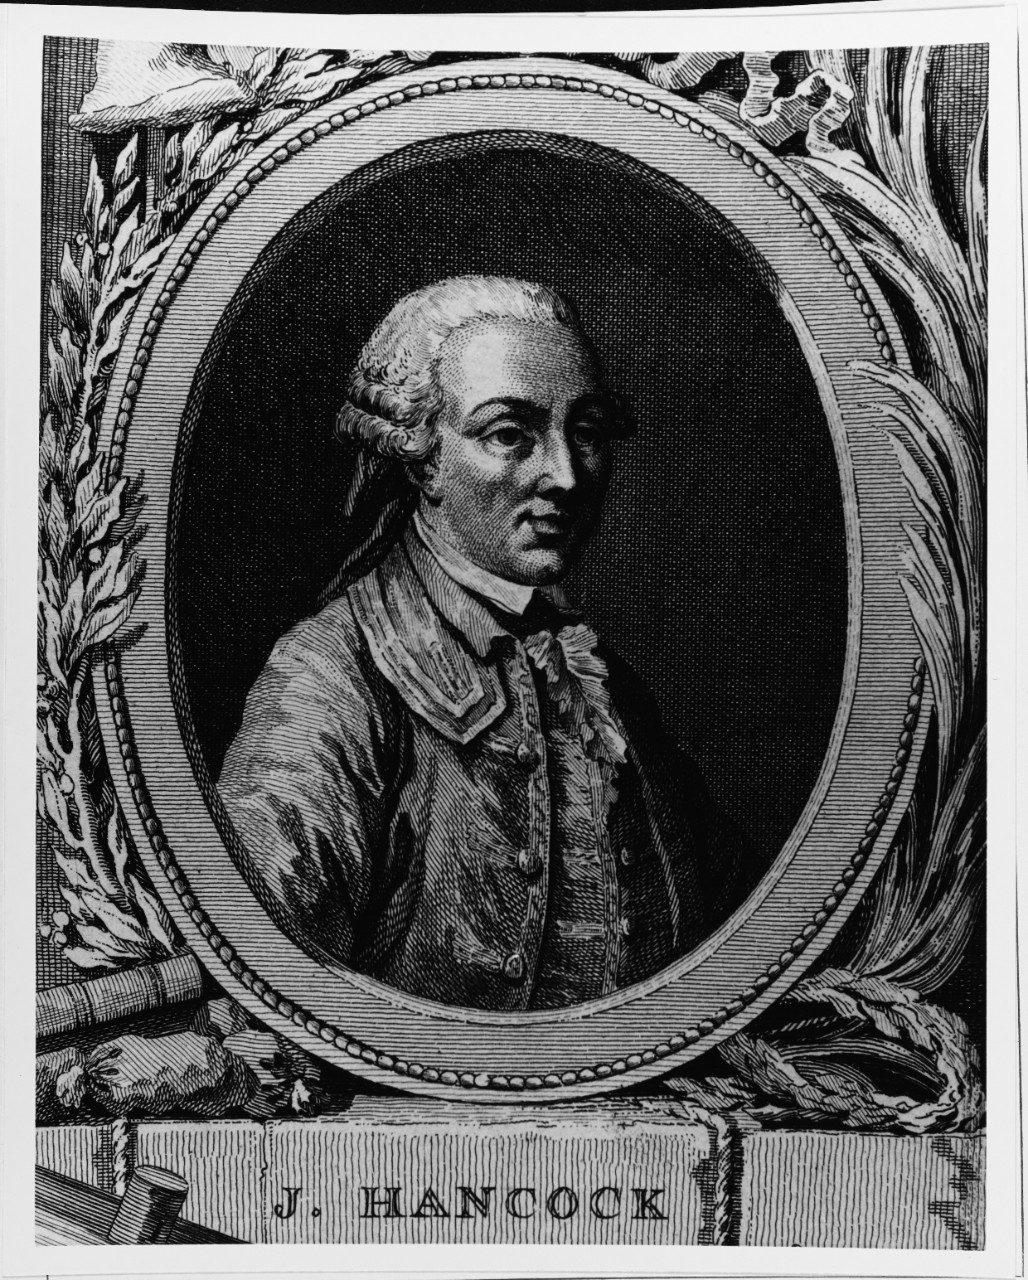 John Hancock (circa 1736-1793), American Merchant and Statesman